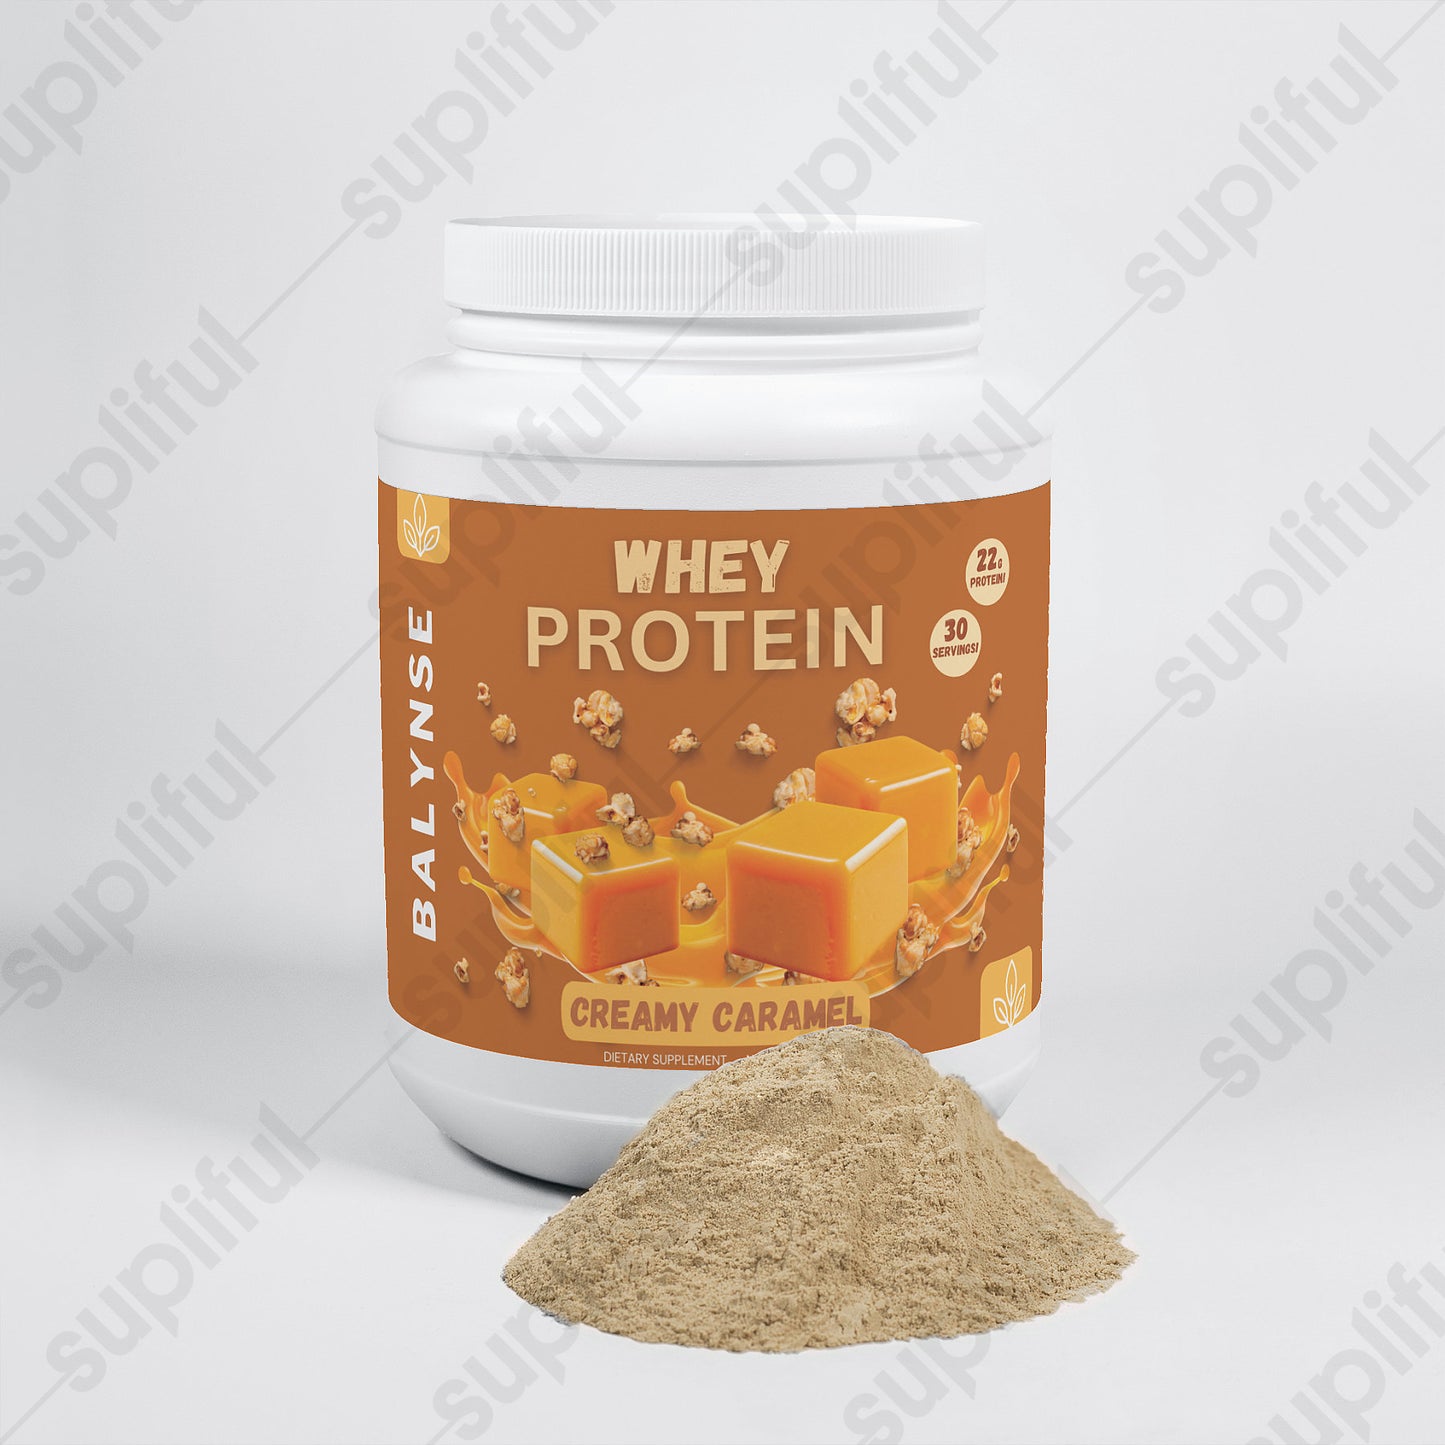 Whey Protein (Creamy Caramel)